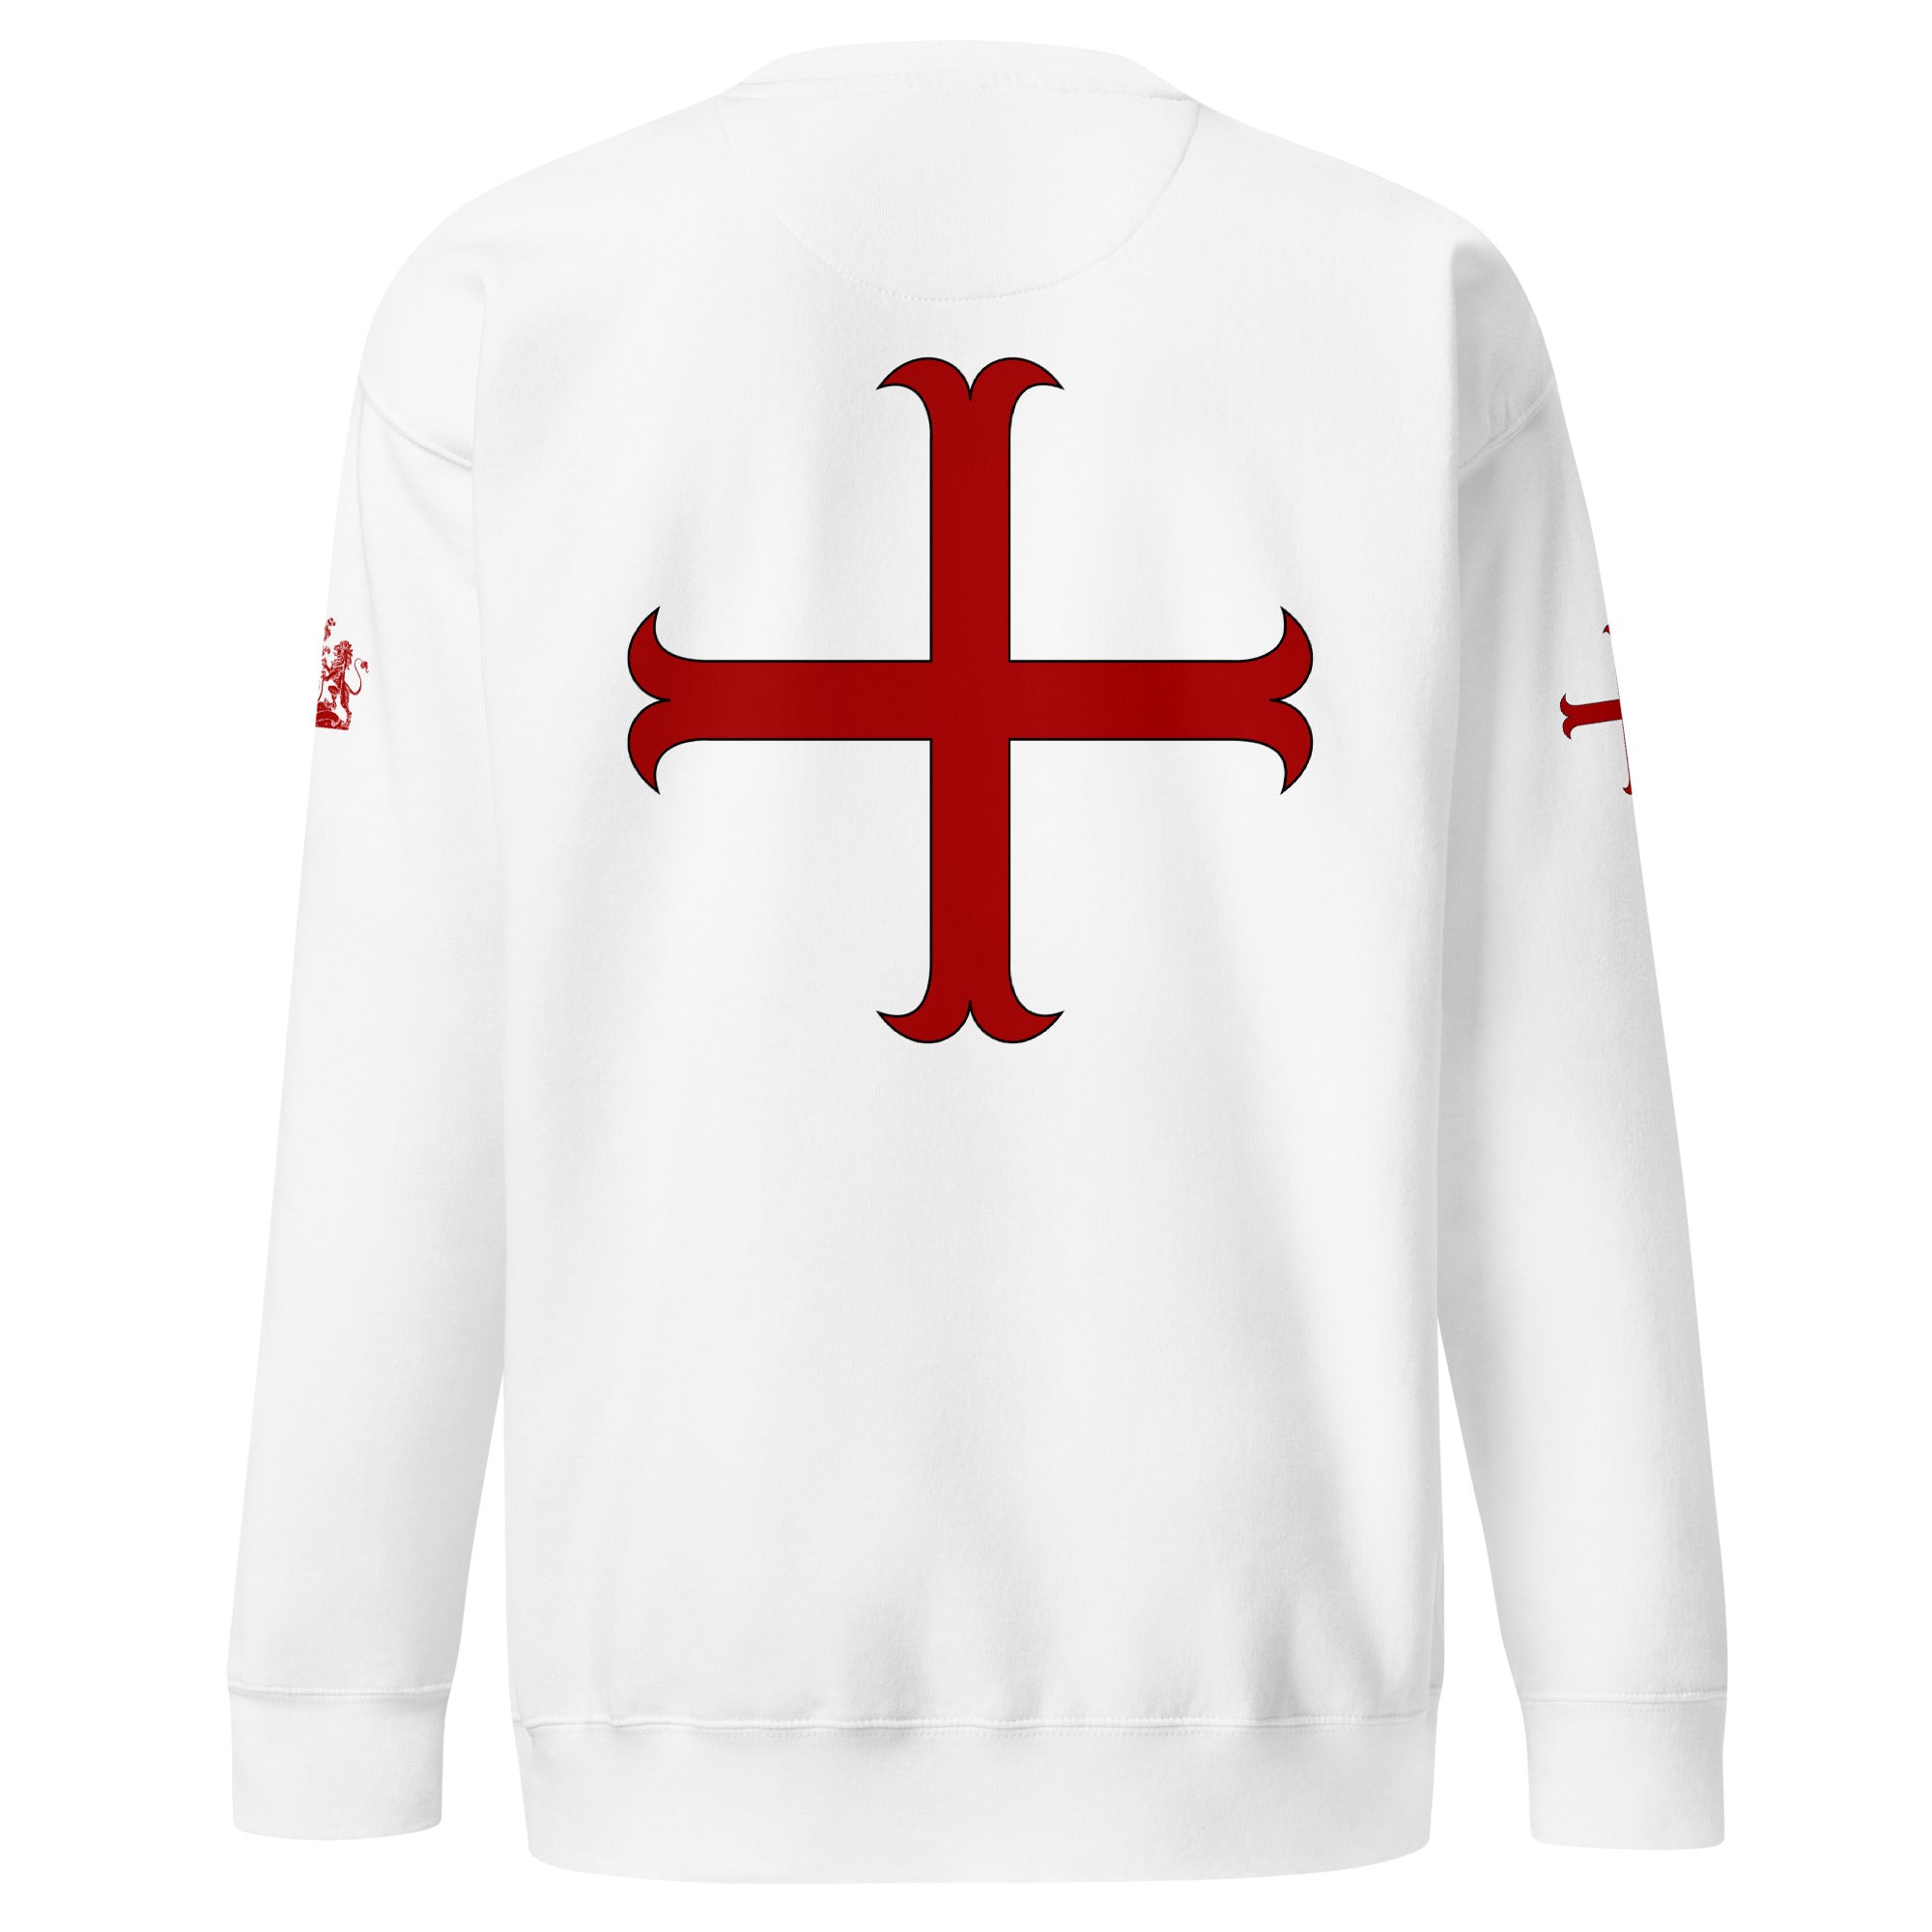 Unisex Premium Sweatshirt - Knight Templar - GRAPHIC T-SHIRTS